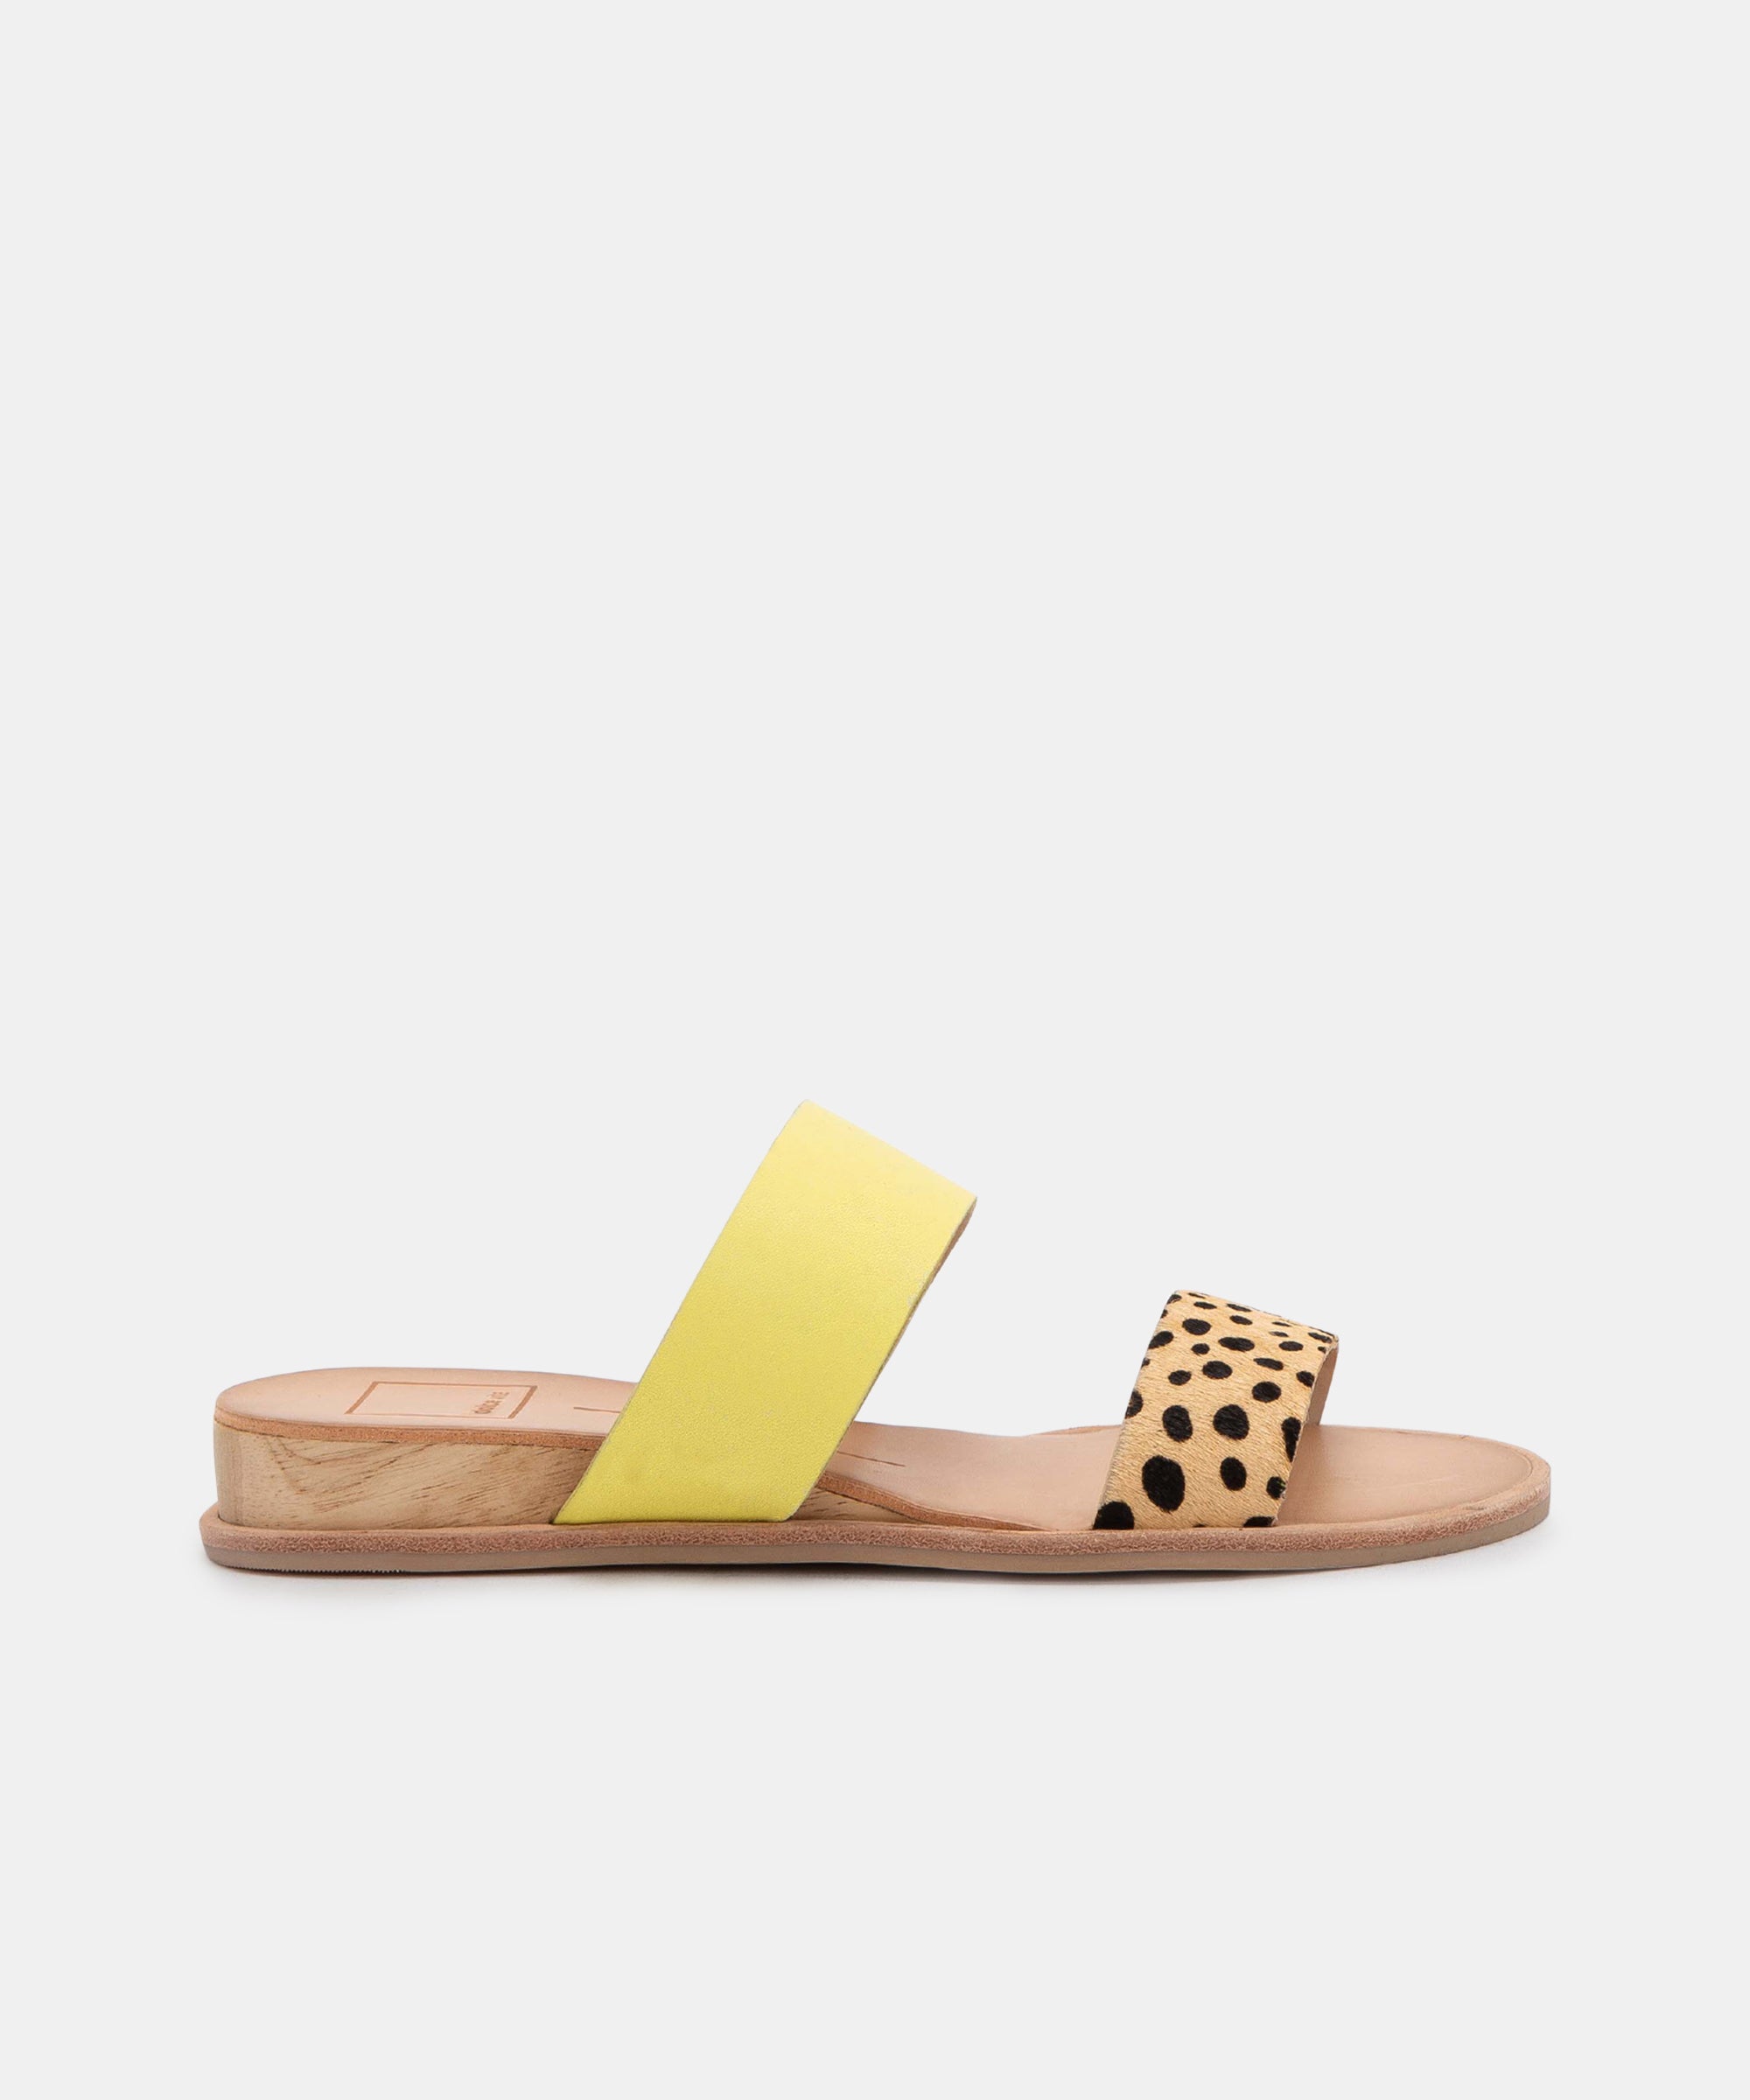 dolce vita sandals leopard